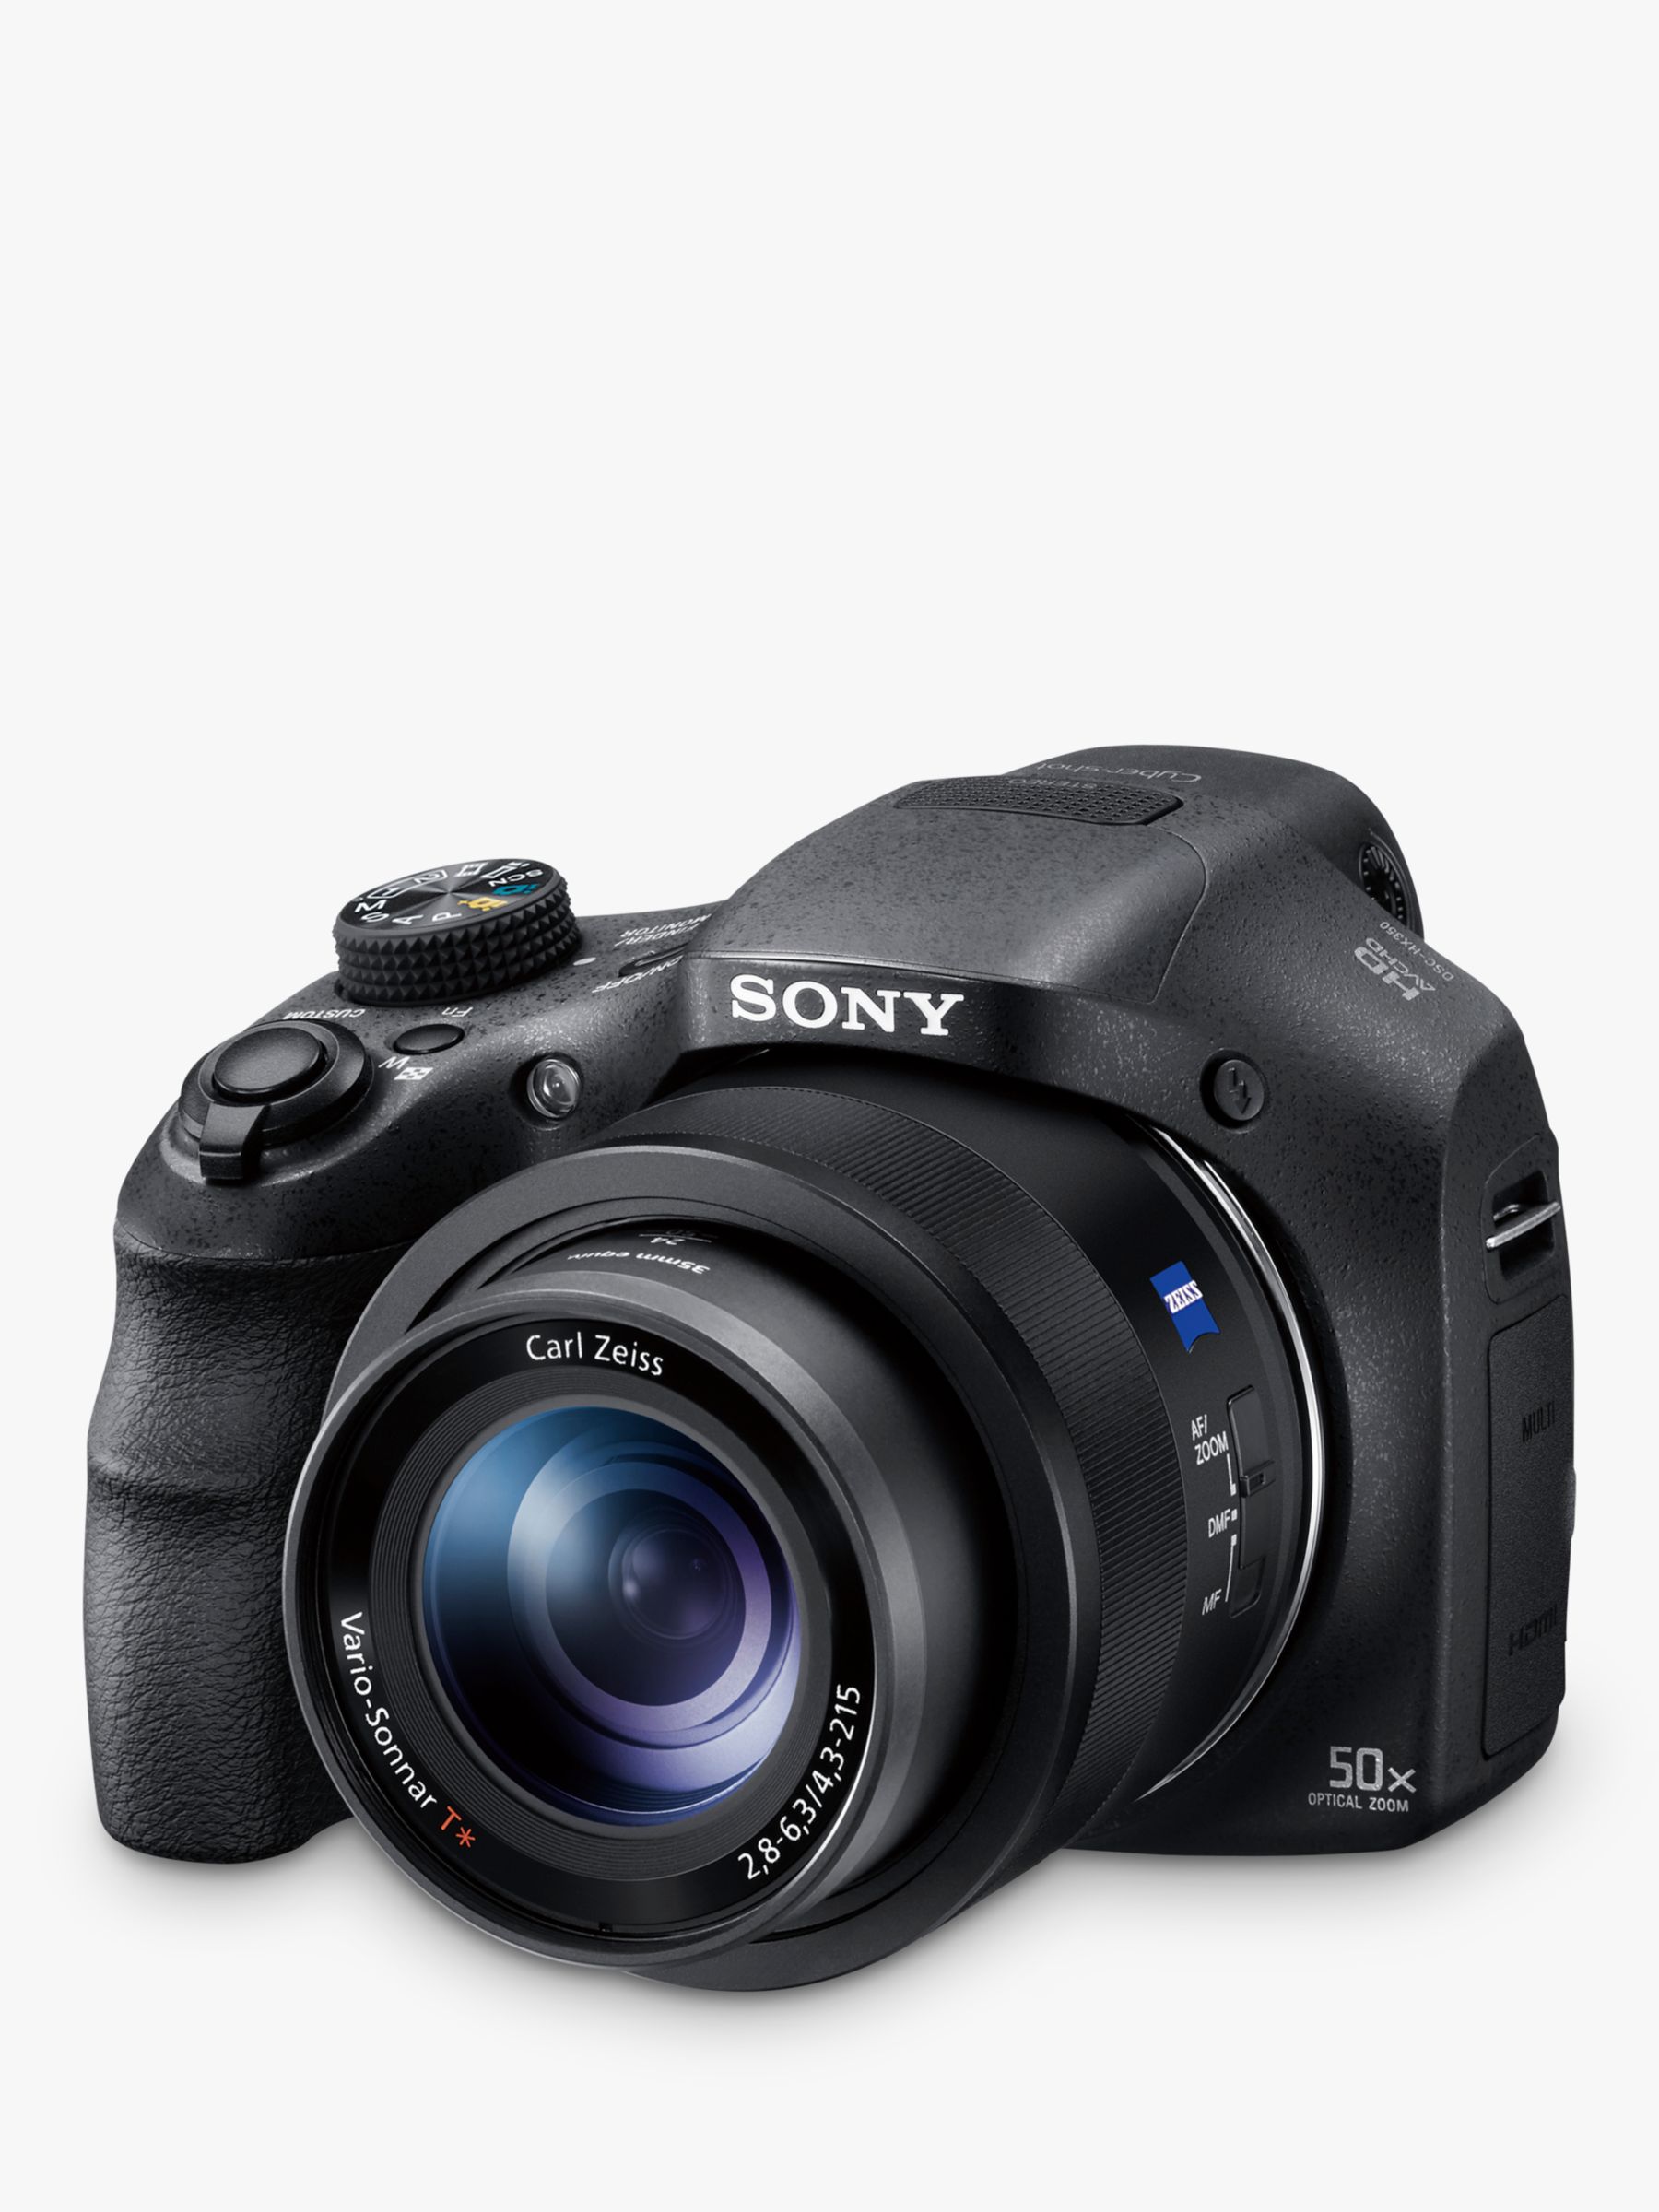 Sony Cyber Shot Dsc Hx350 Smart Bridge Camera Hd 1080p 204mp 50x